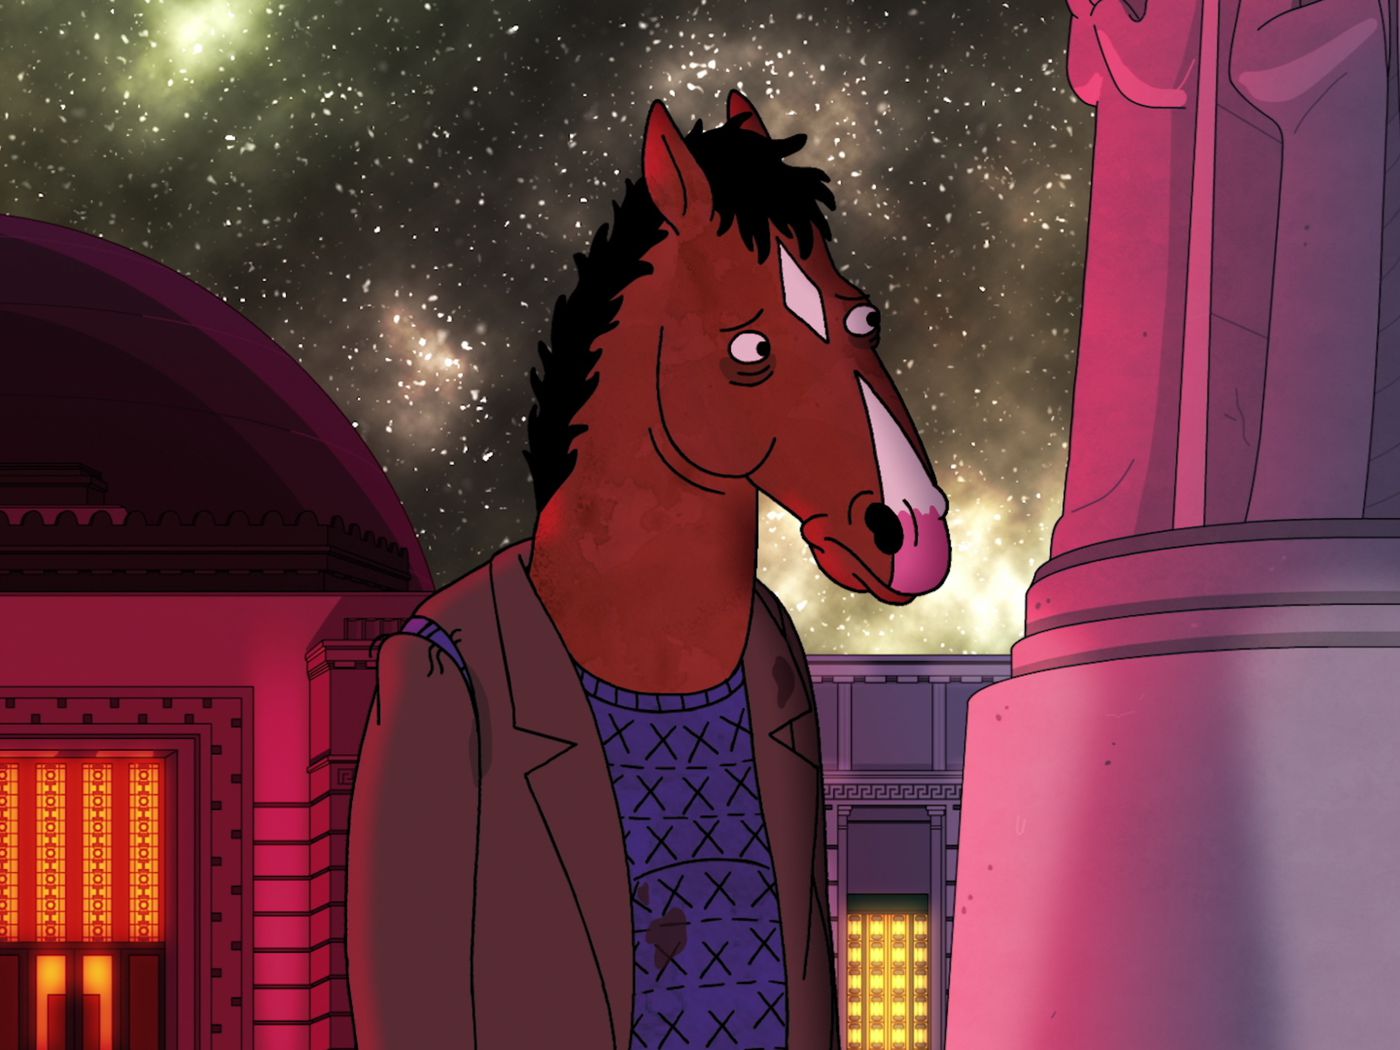 BoJack Horseman at the planetarium